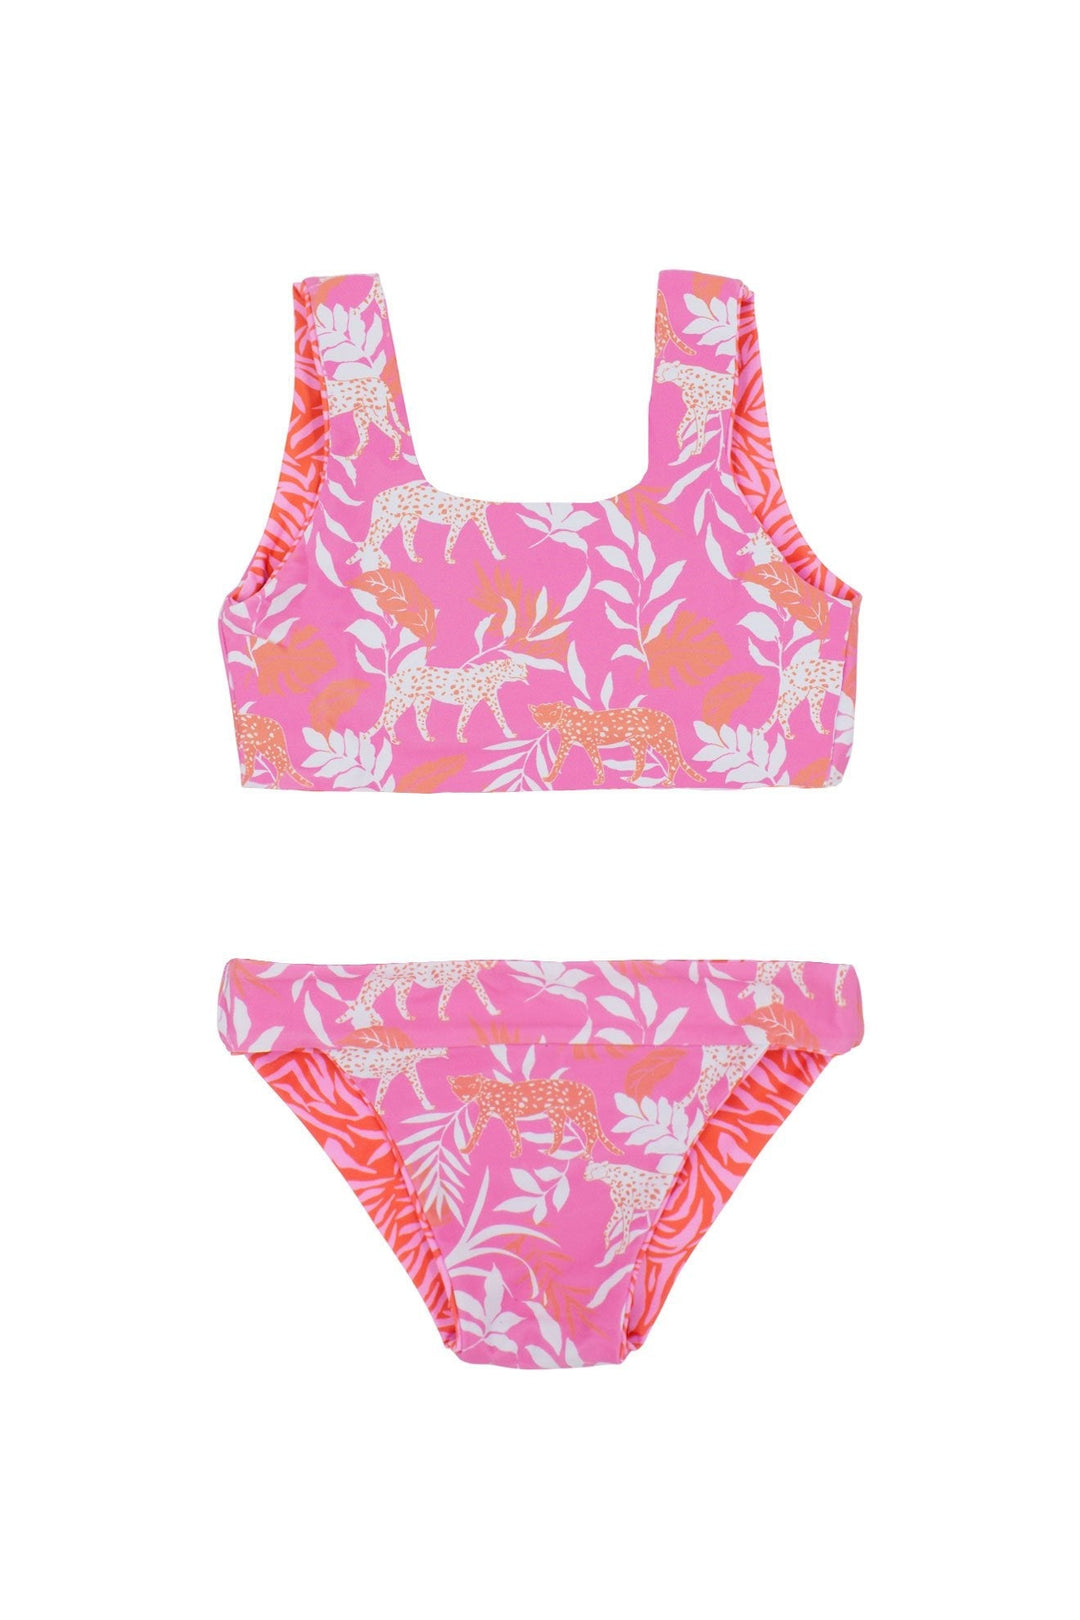 Girls Island Hopper Reversible Bikini by Feather 4 Arrow